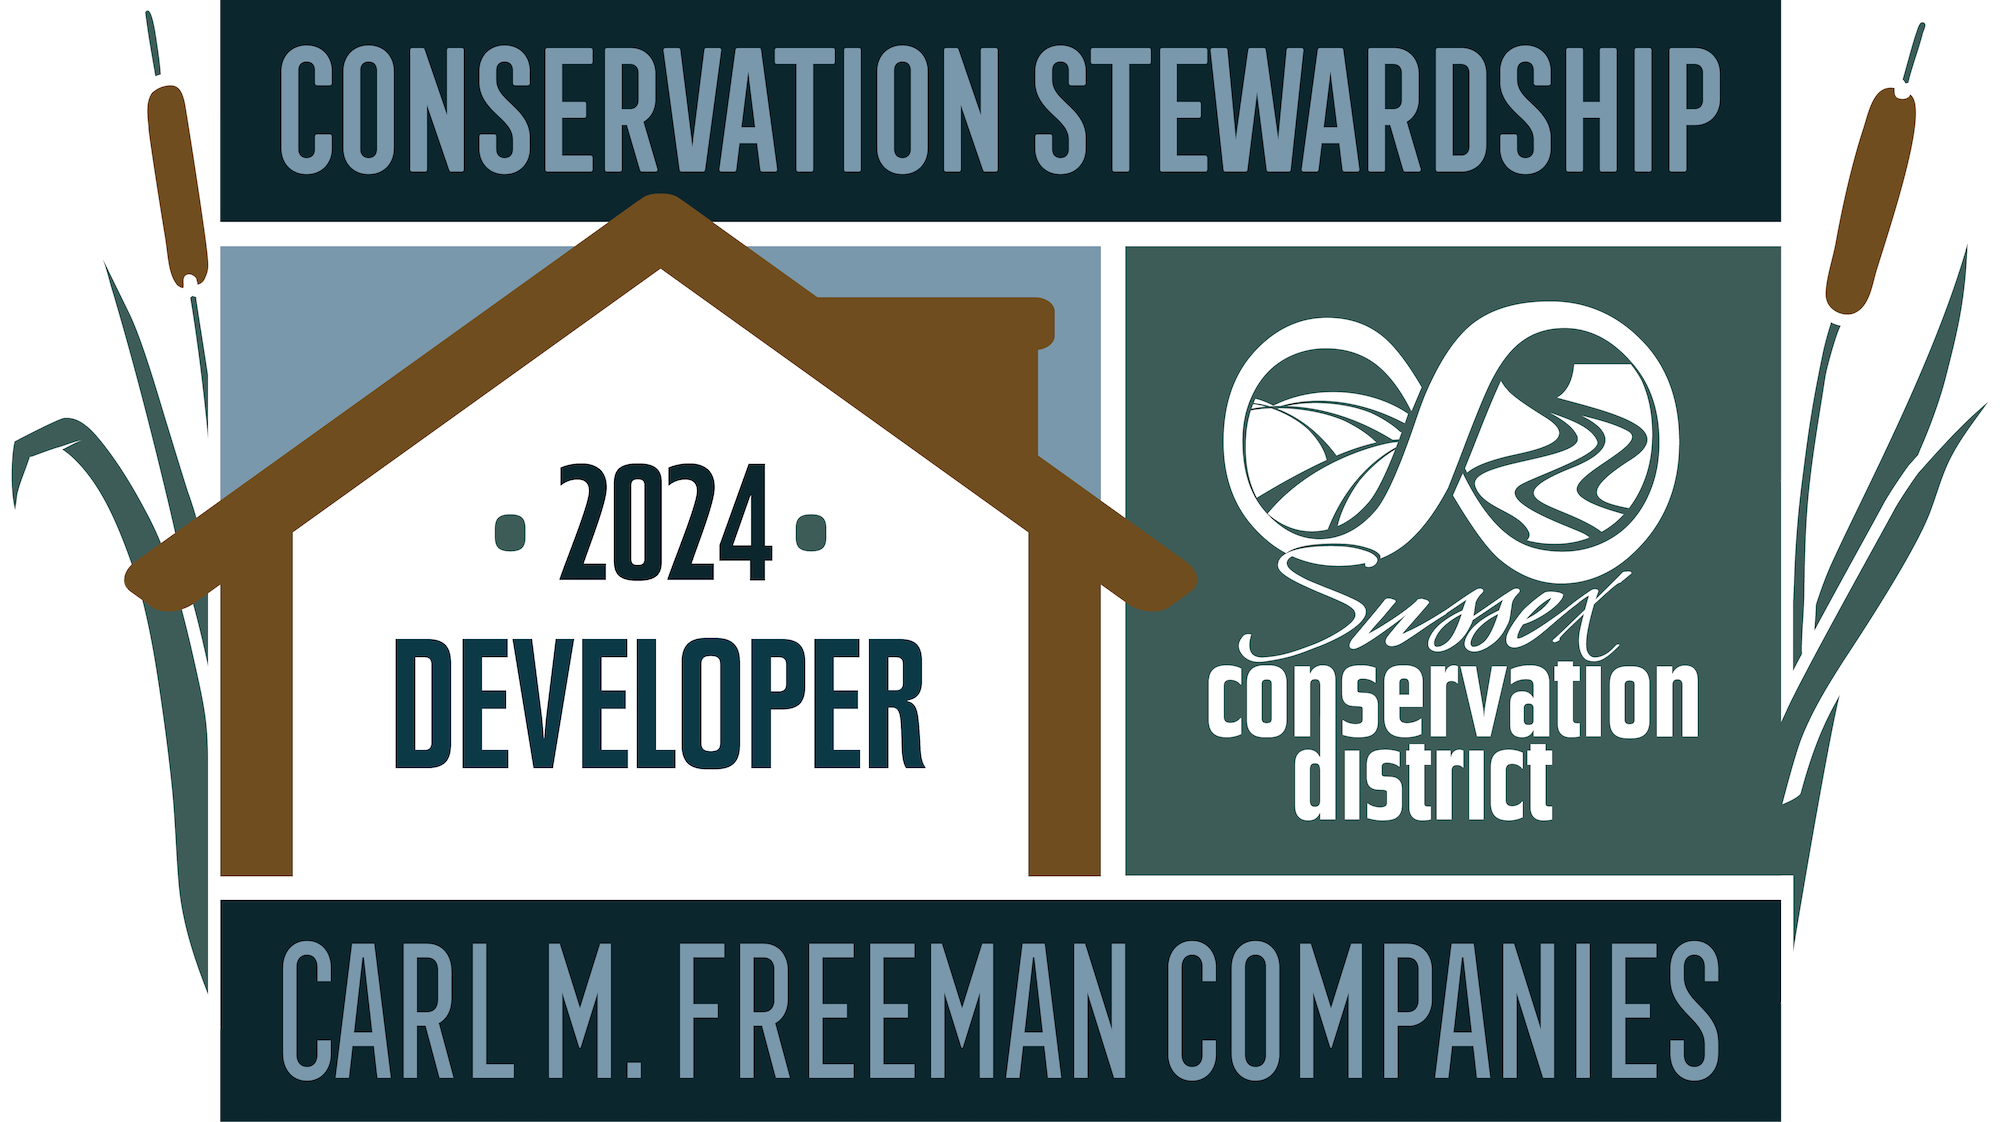 Conservation Stewardship 2024 Developer of the year - Carl M. Freeman